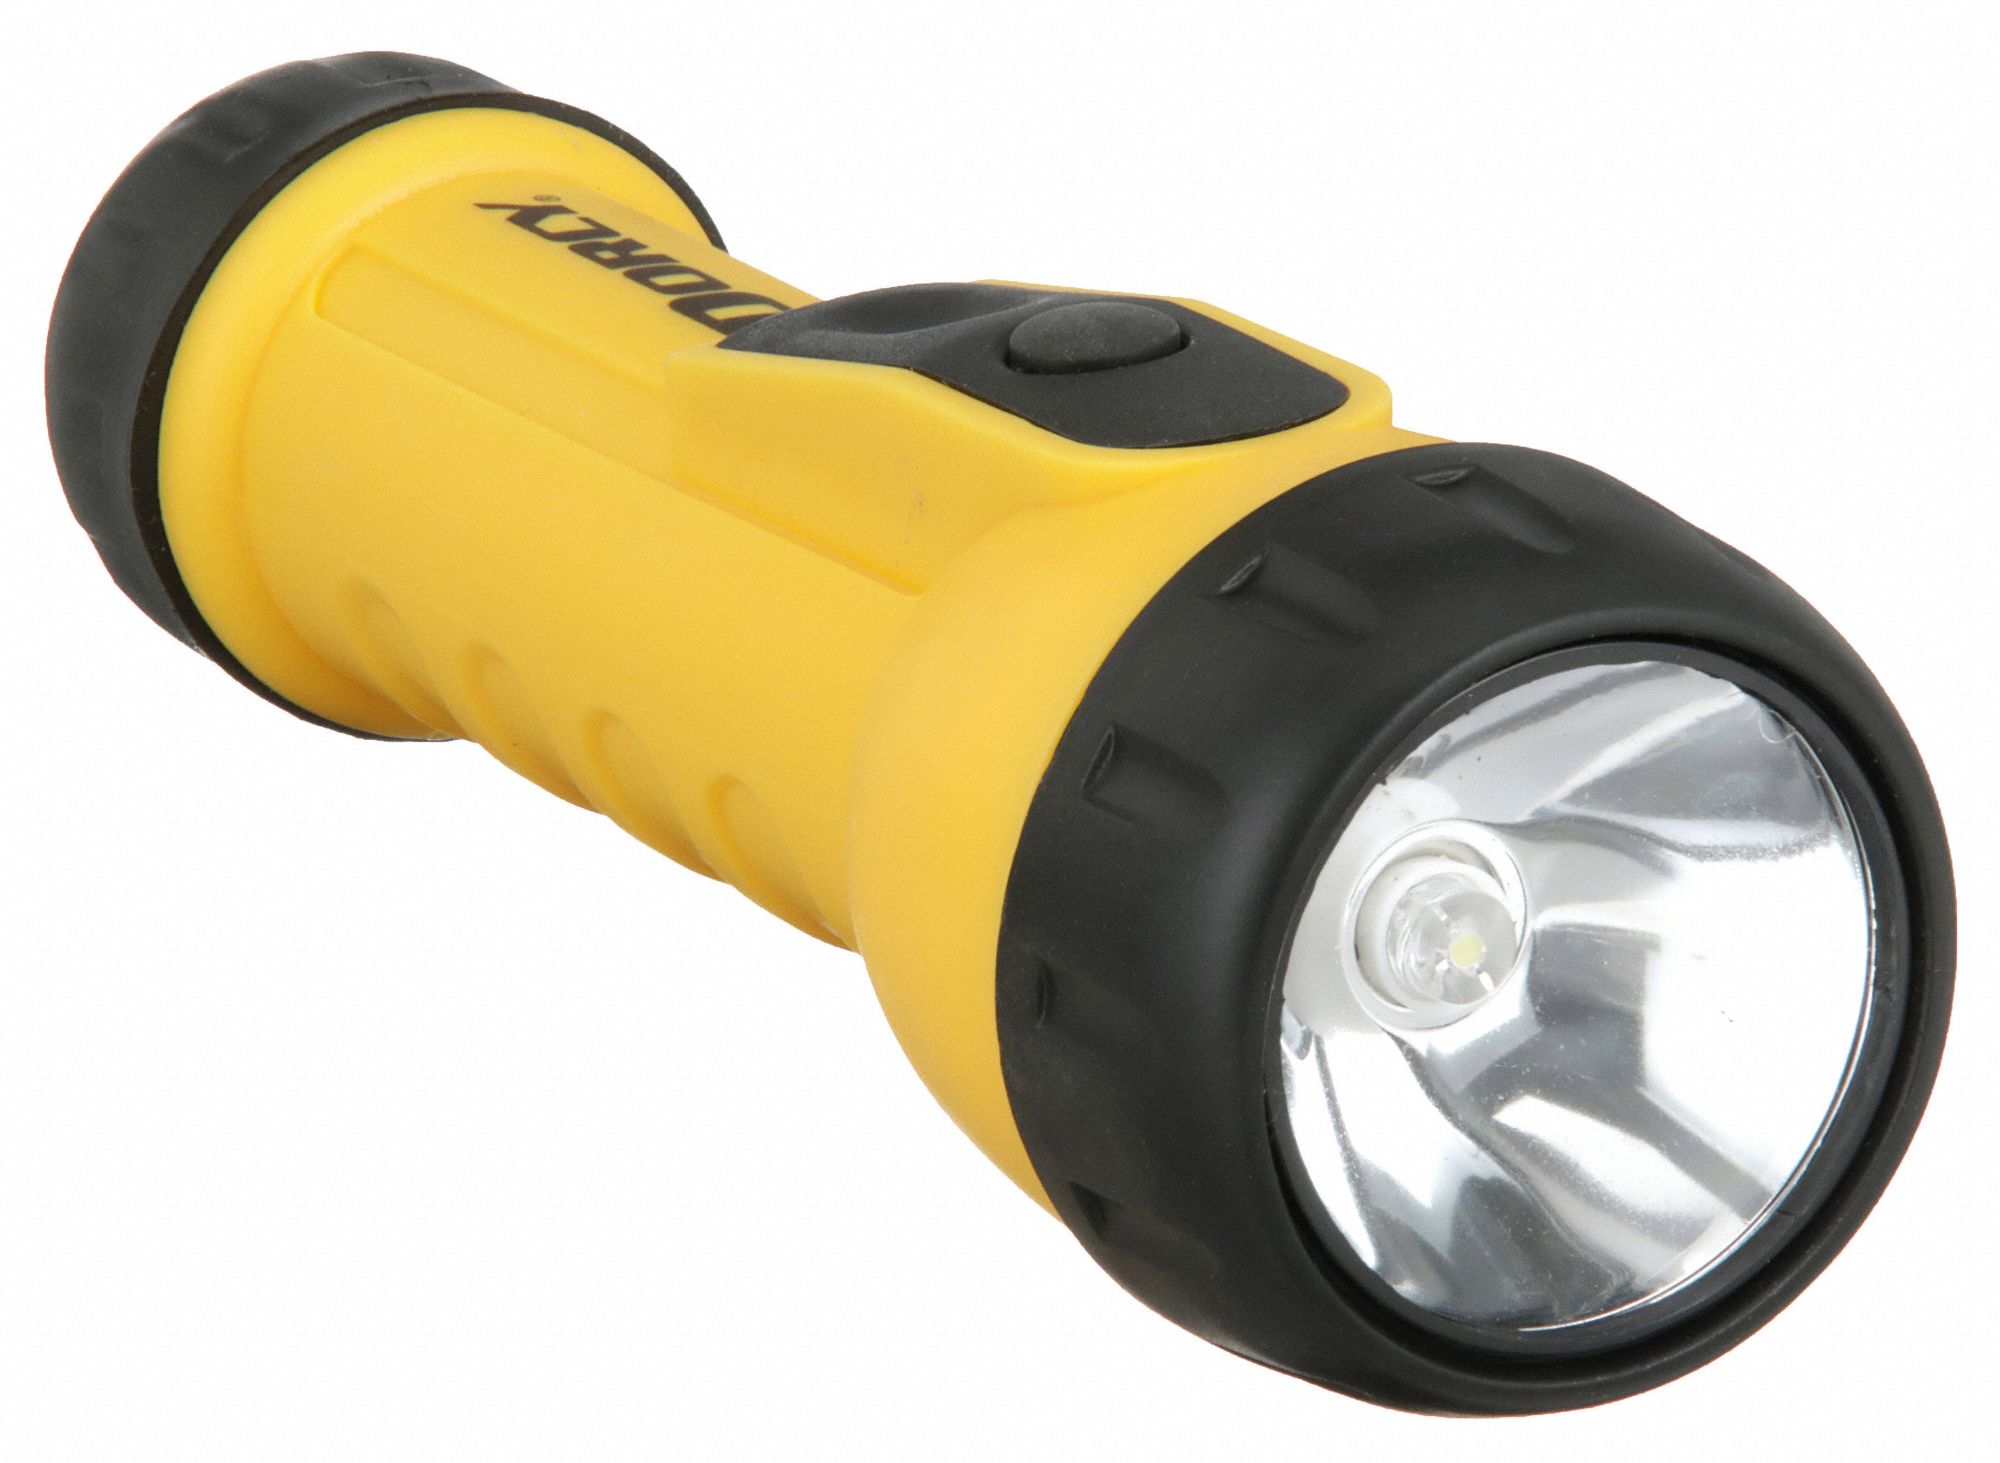 APPROVED VENDOR Flashlight: LED, 35 lm Max Brightness, 168 hr Run Time at  Max Brightness, Yellow